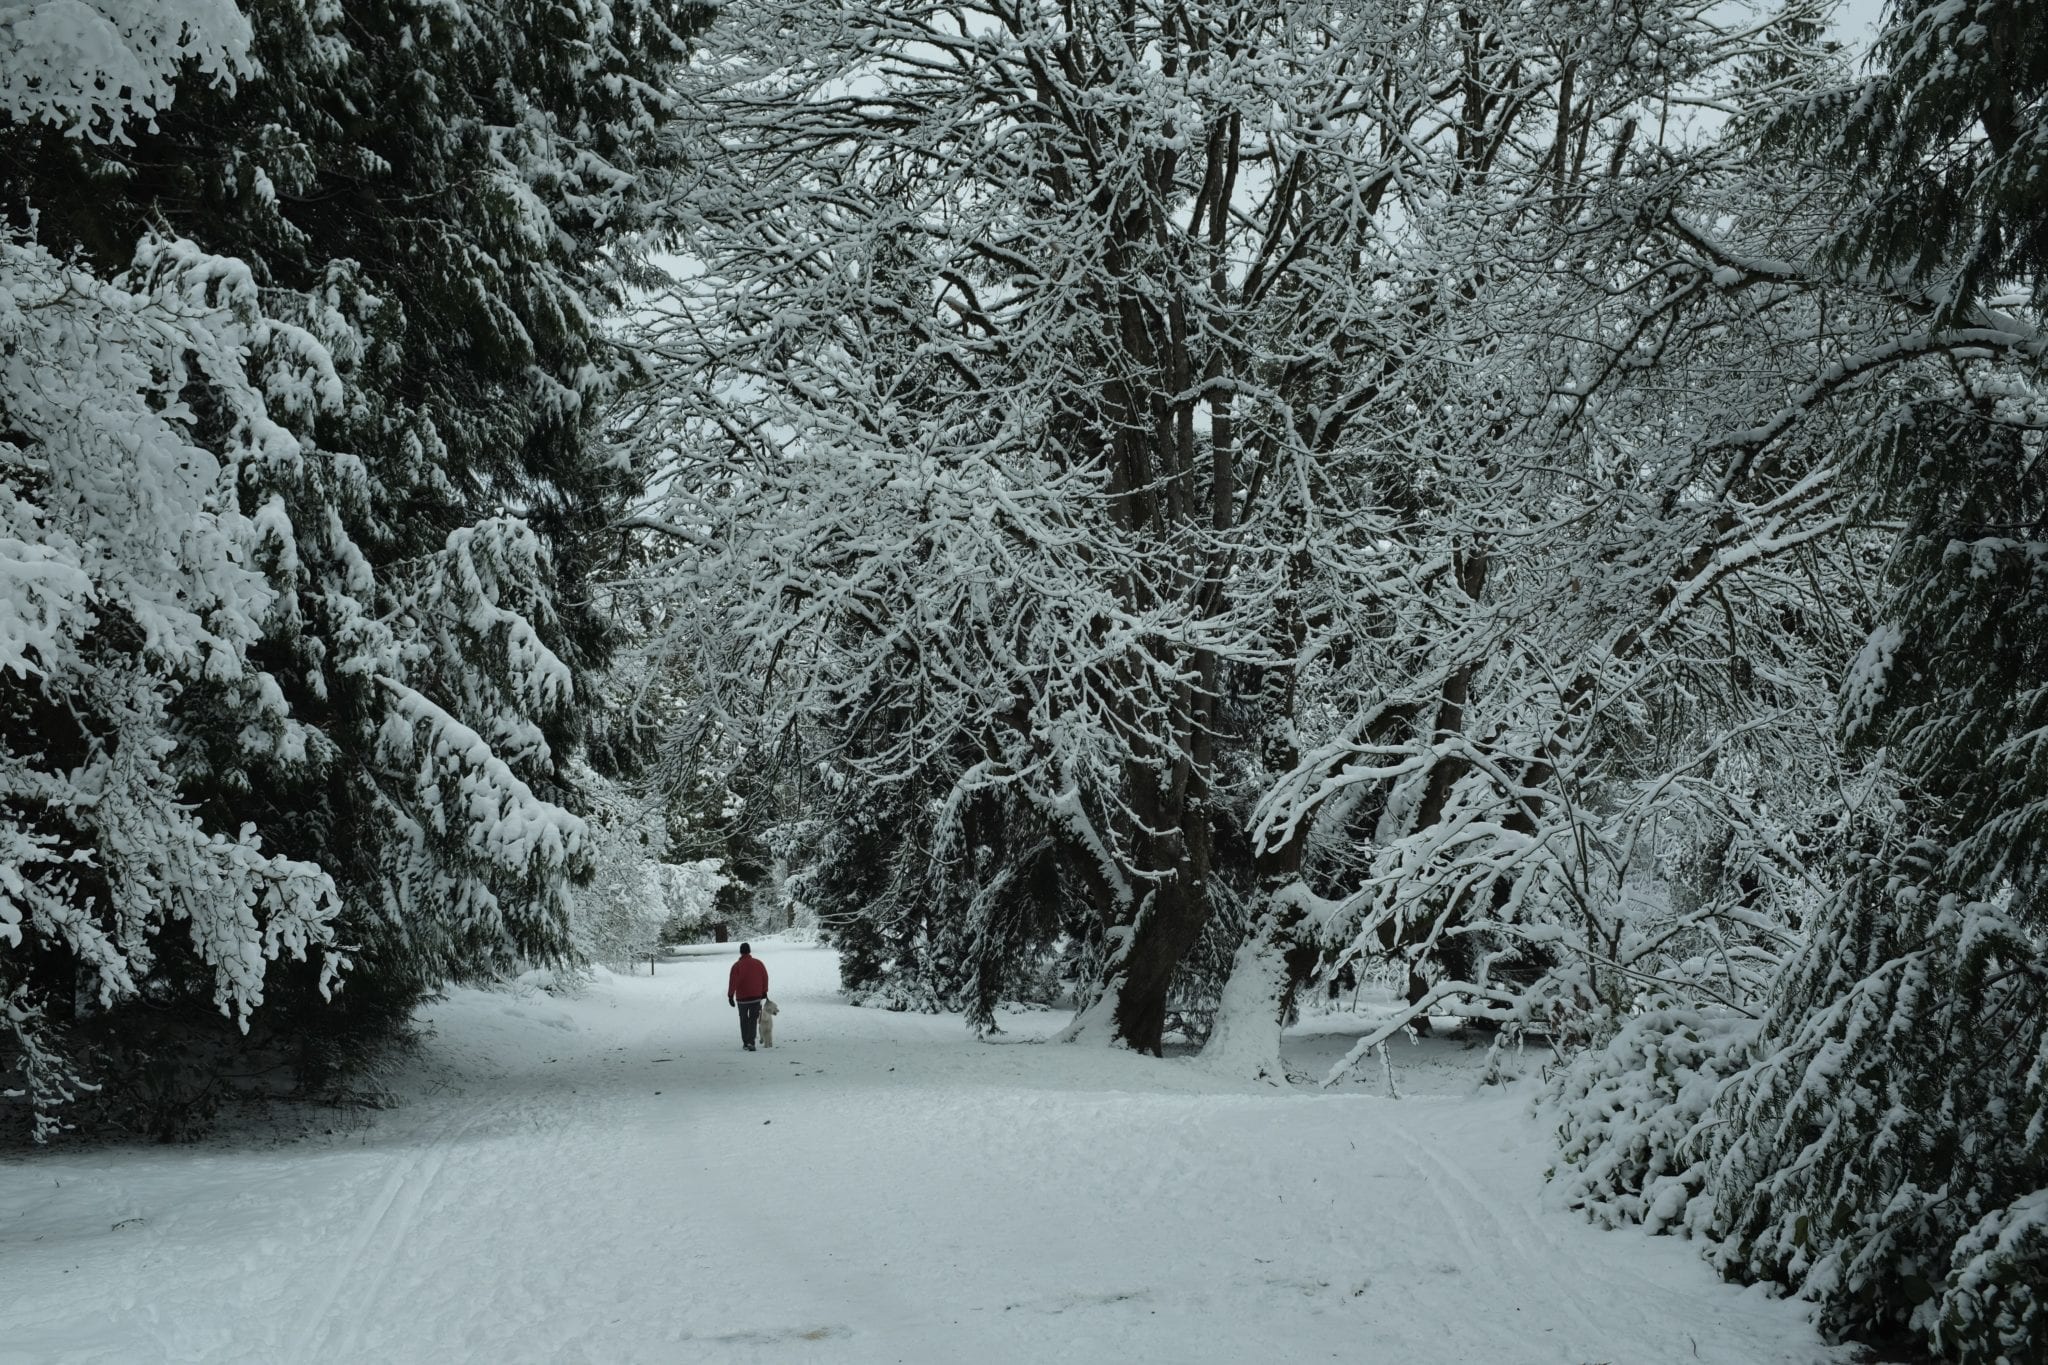 Washington Arboretum after past snowfall. Photo by Girma Nigusse on Unsplash